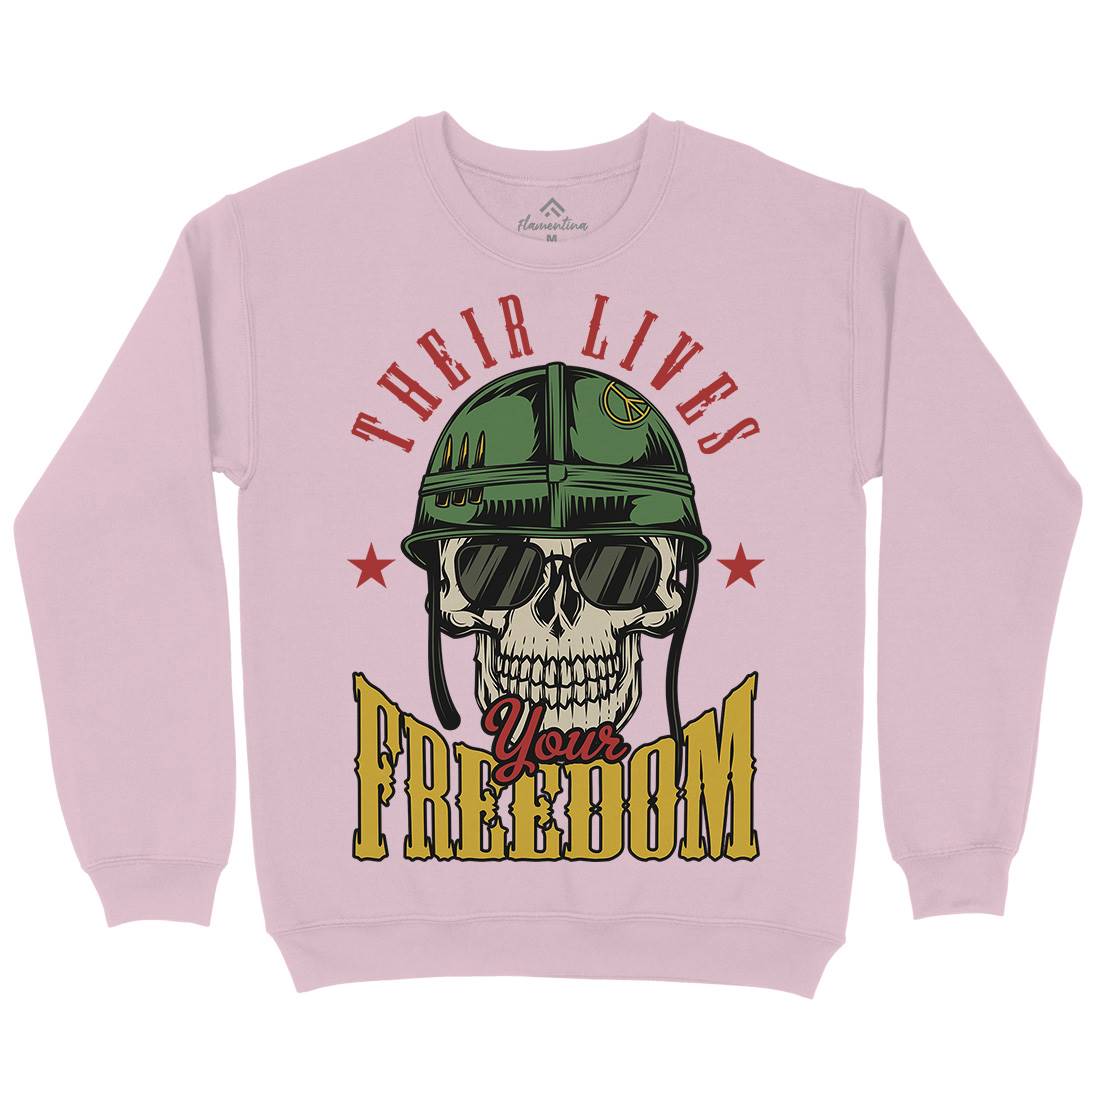 Your Freedom Kids Crew Neck Sweatshirt Army C899